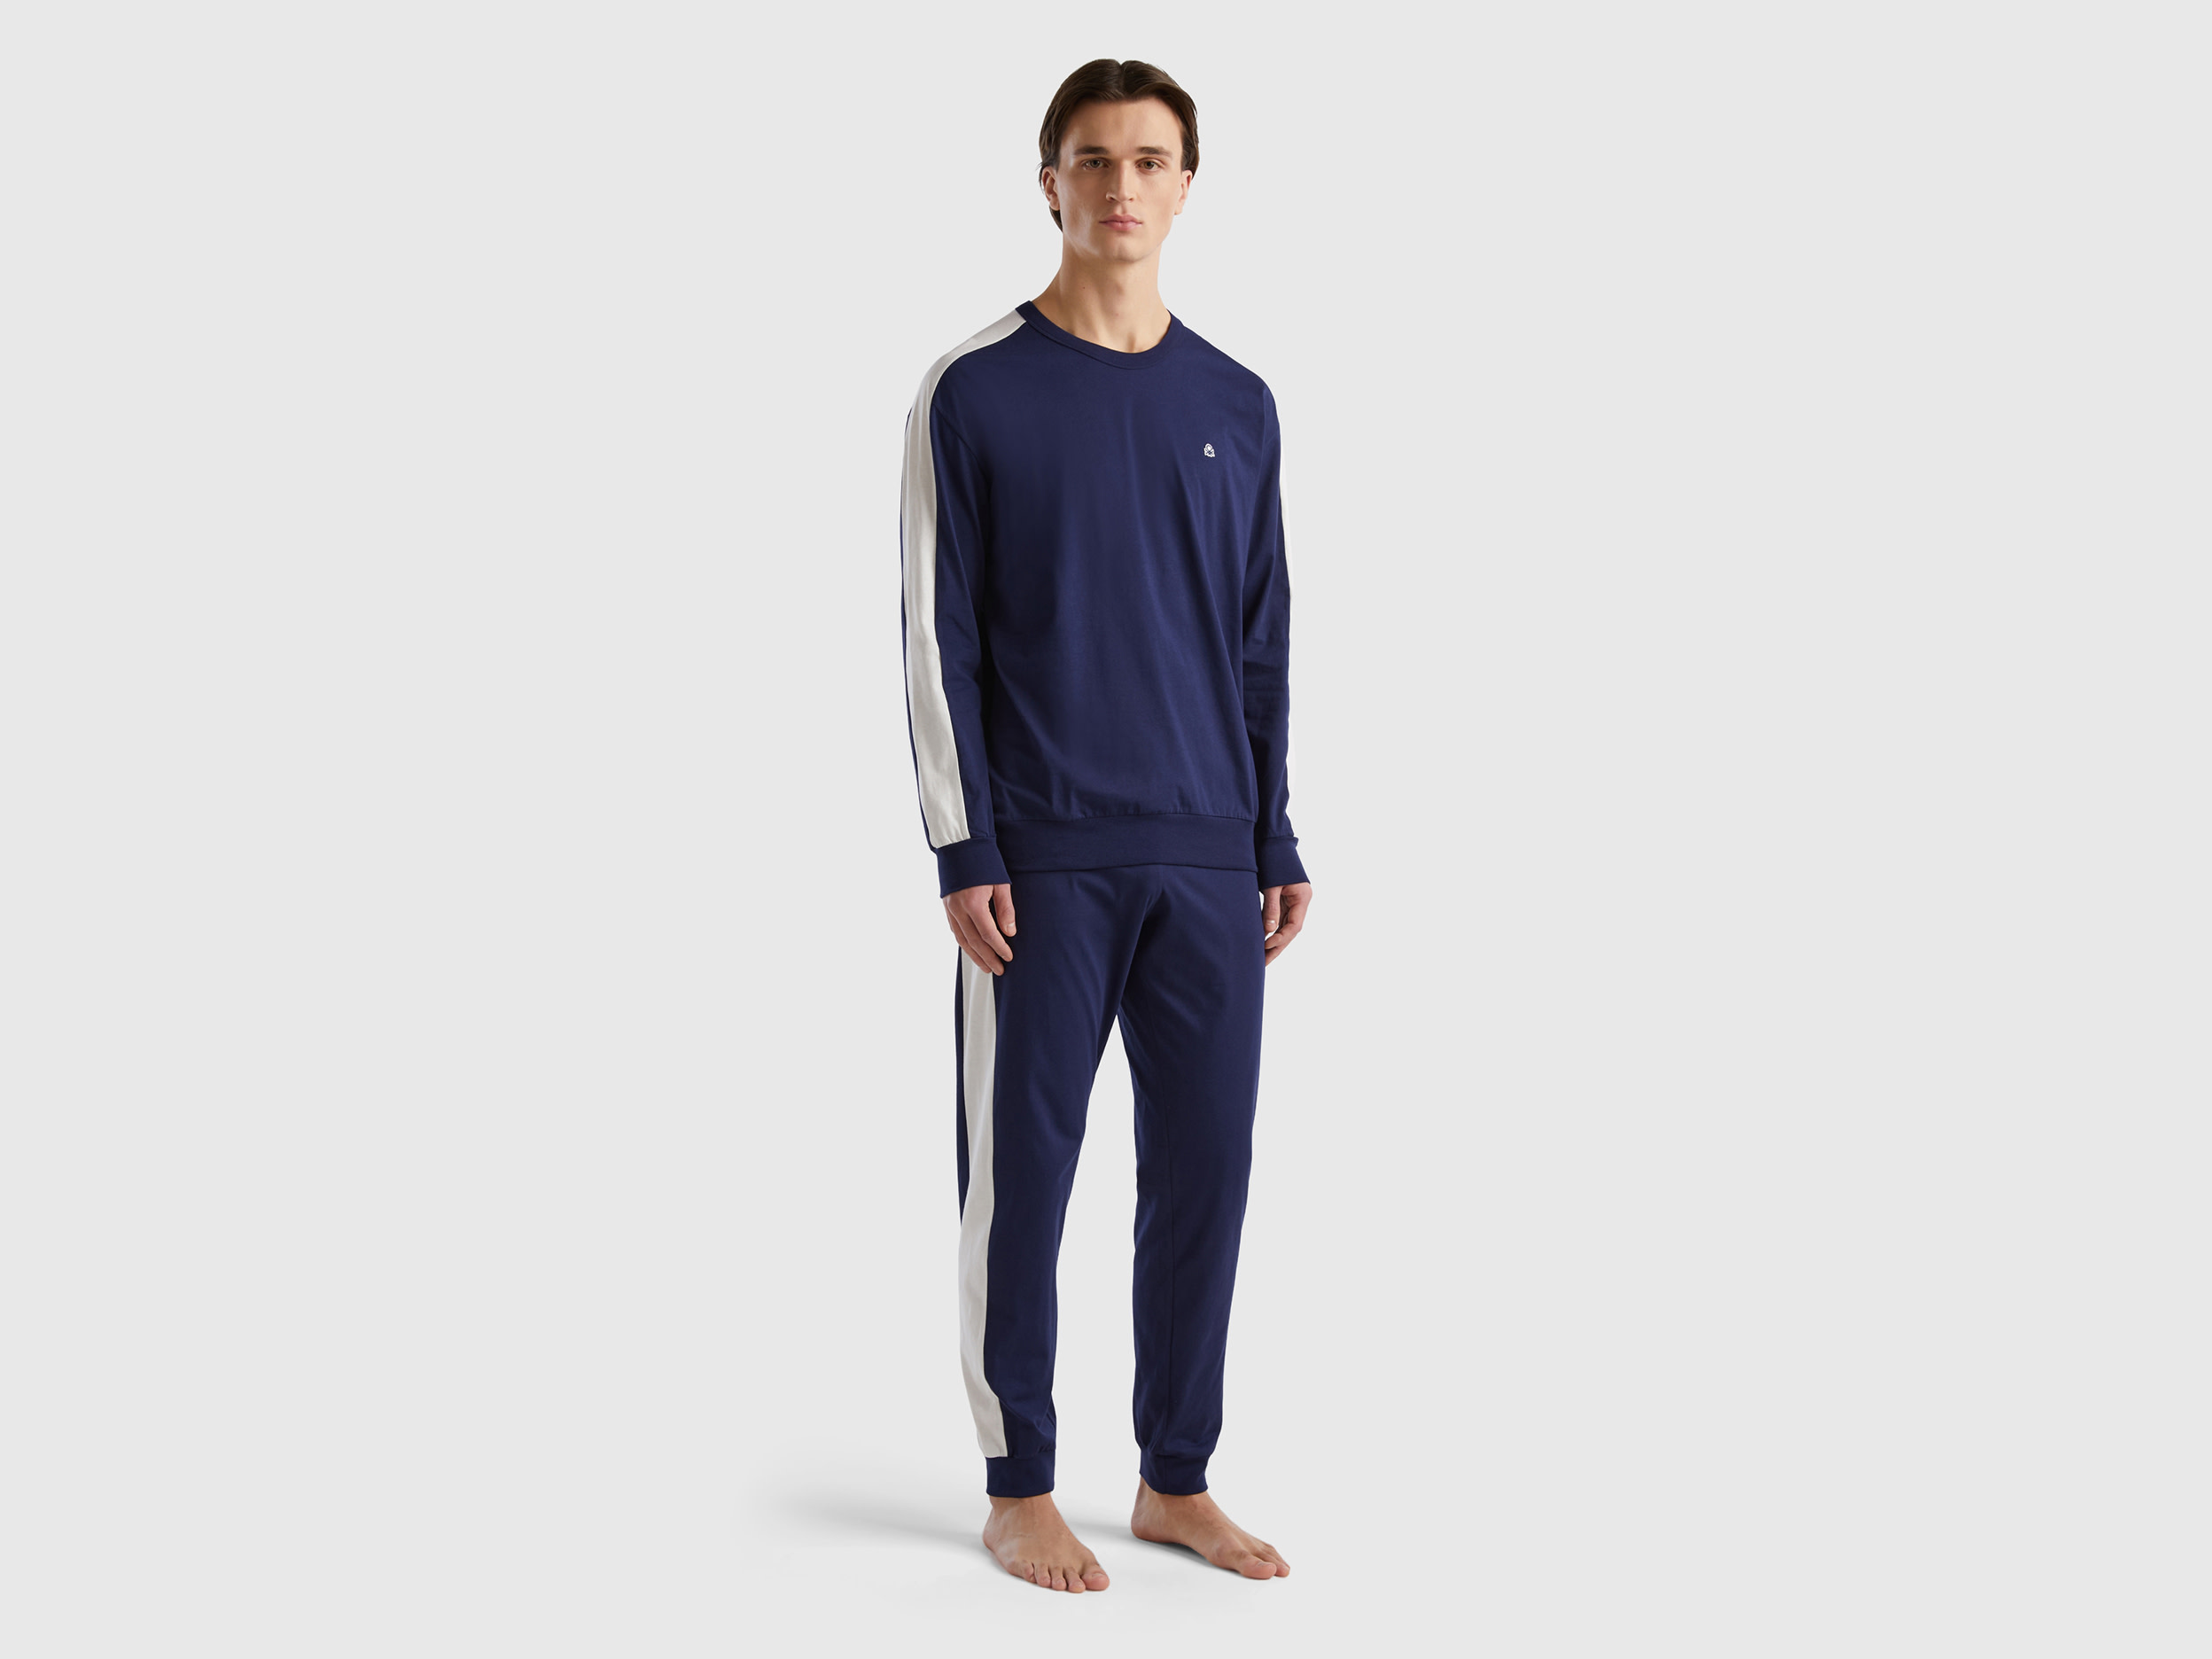 Benetton, Pyjamas With Side Stripes, size M, Dark Blue, Men